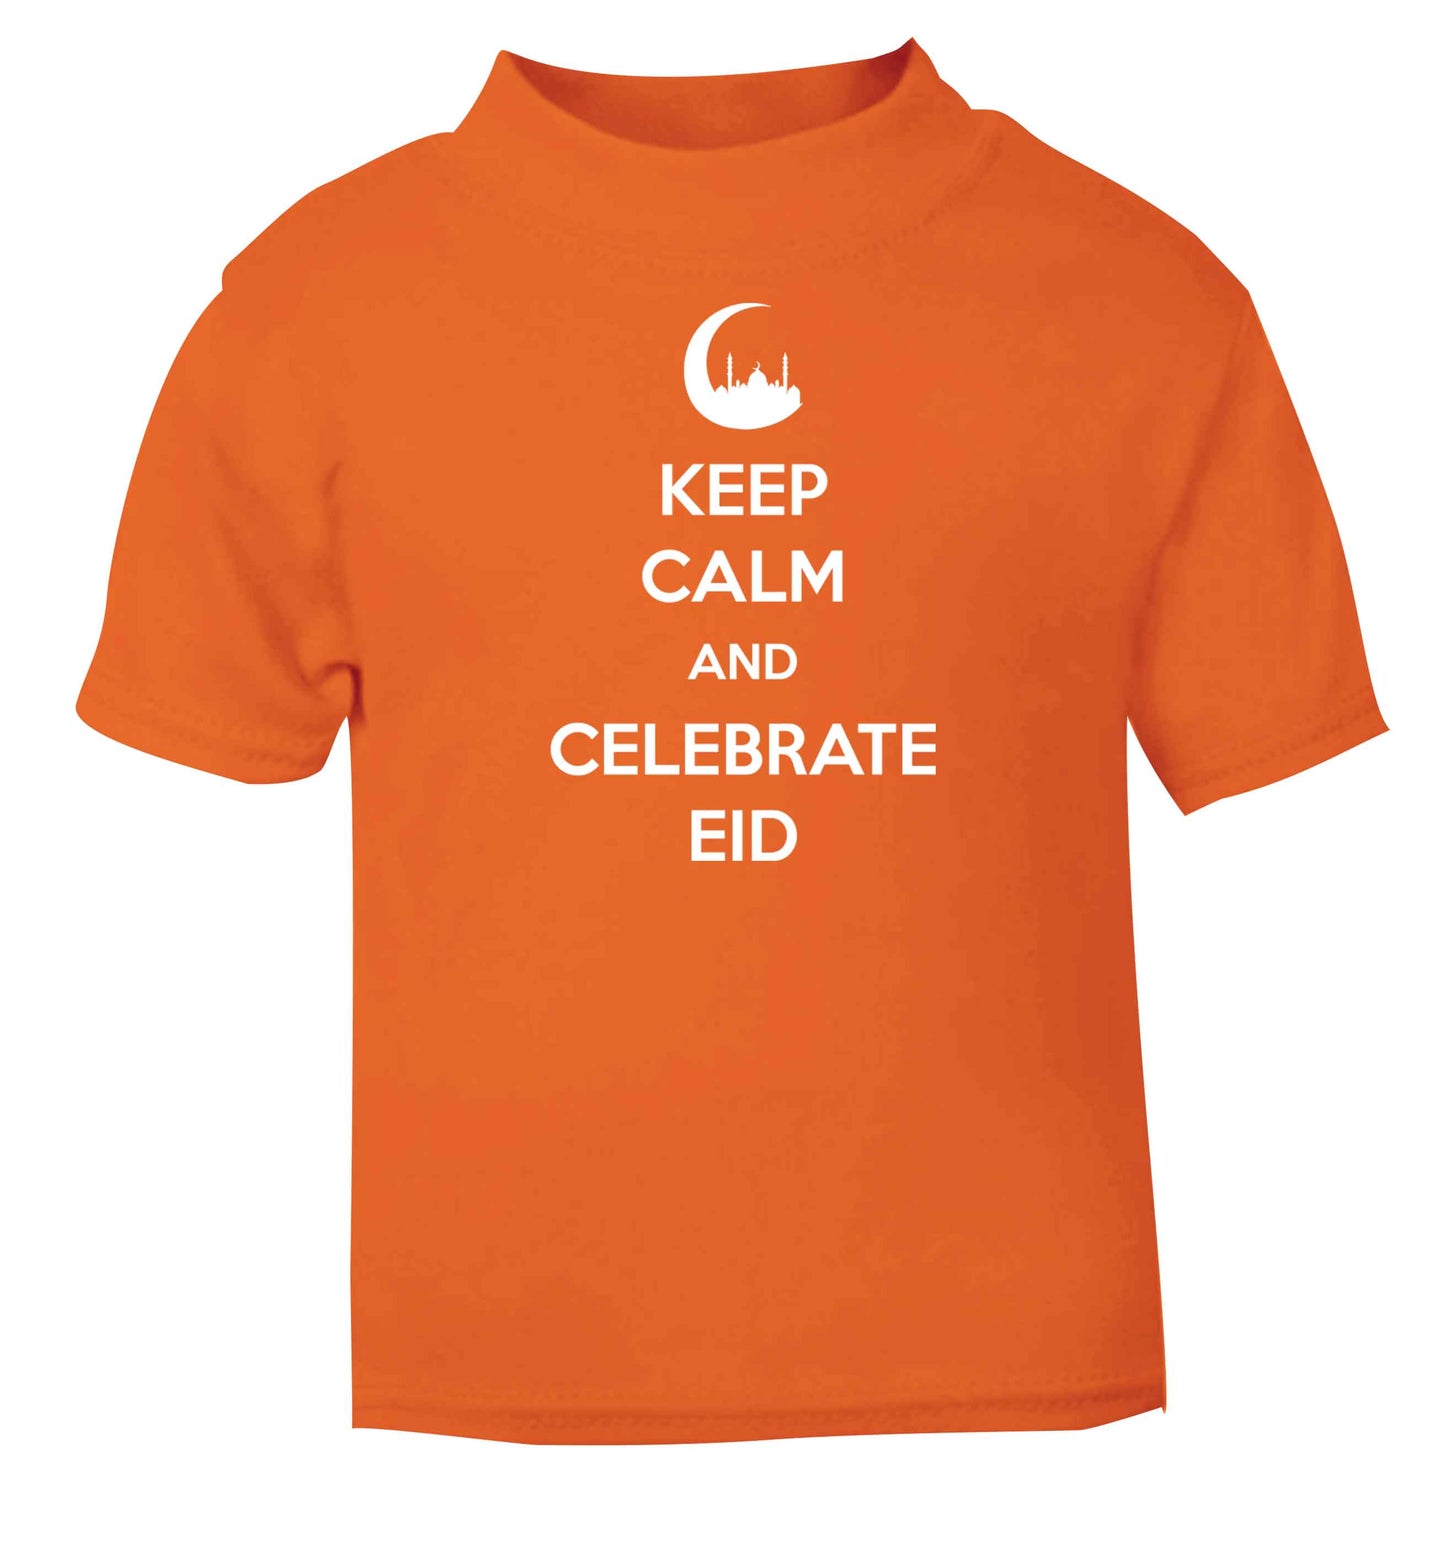 Keep calm and celebrate Eid orange baby toddler Tshirt 2 Years